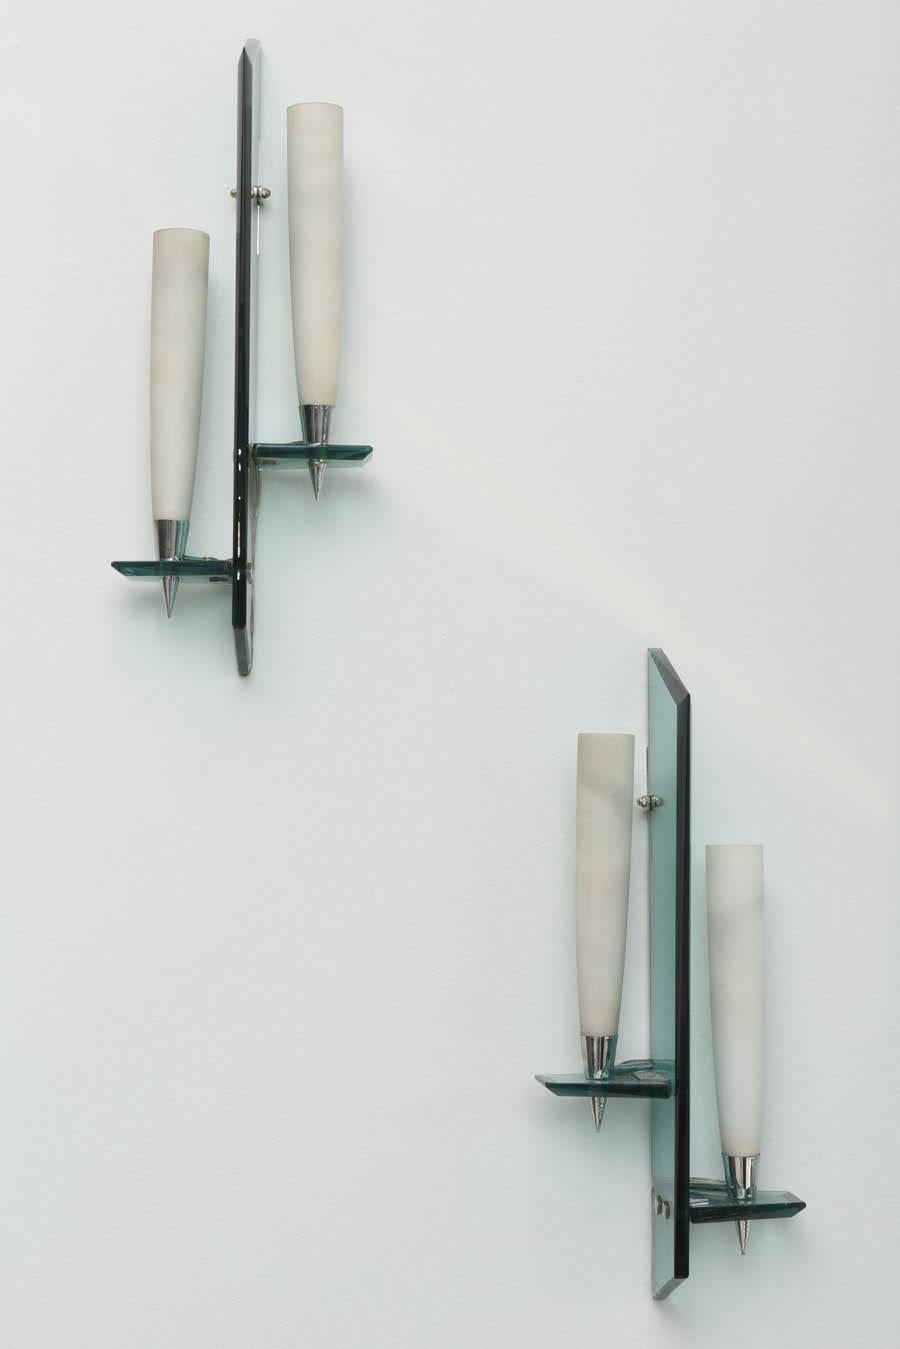 Pair Italian Modern wall lights, max ingrand for Fontana Arte, 1950's.